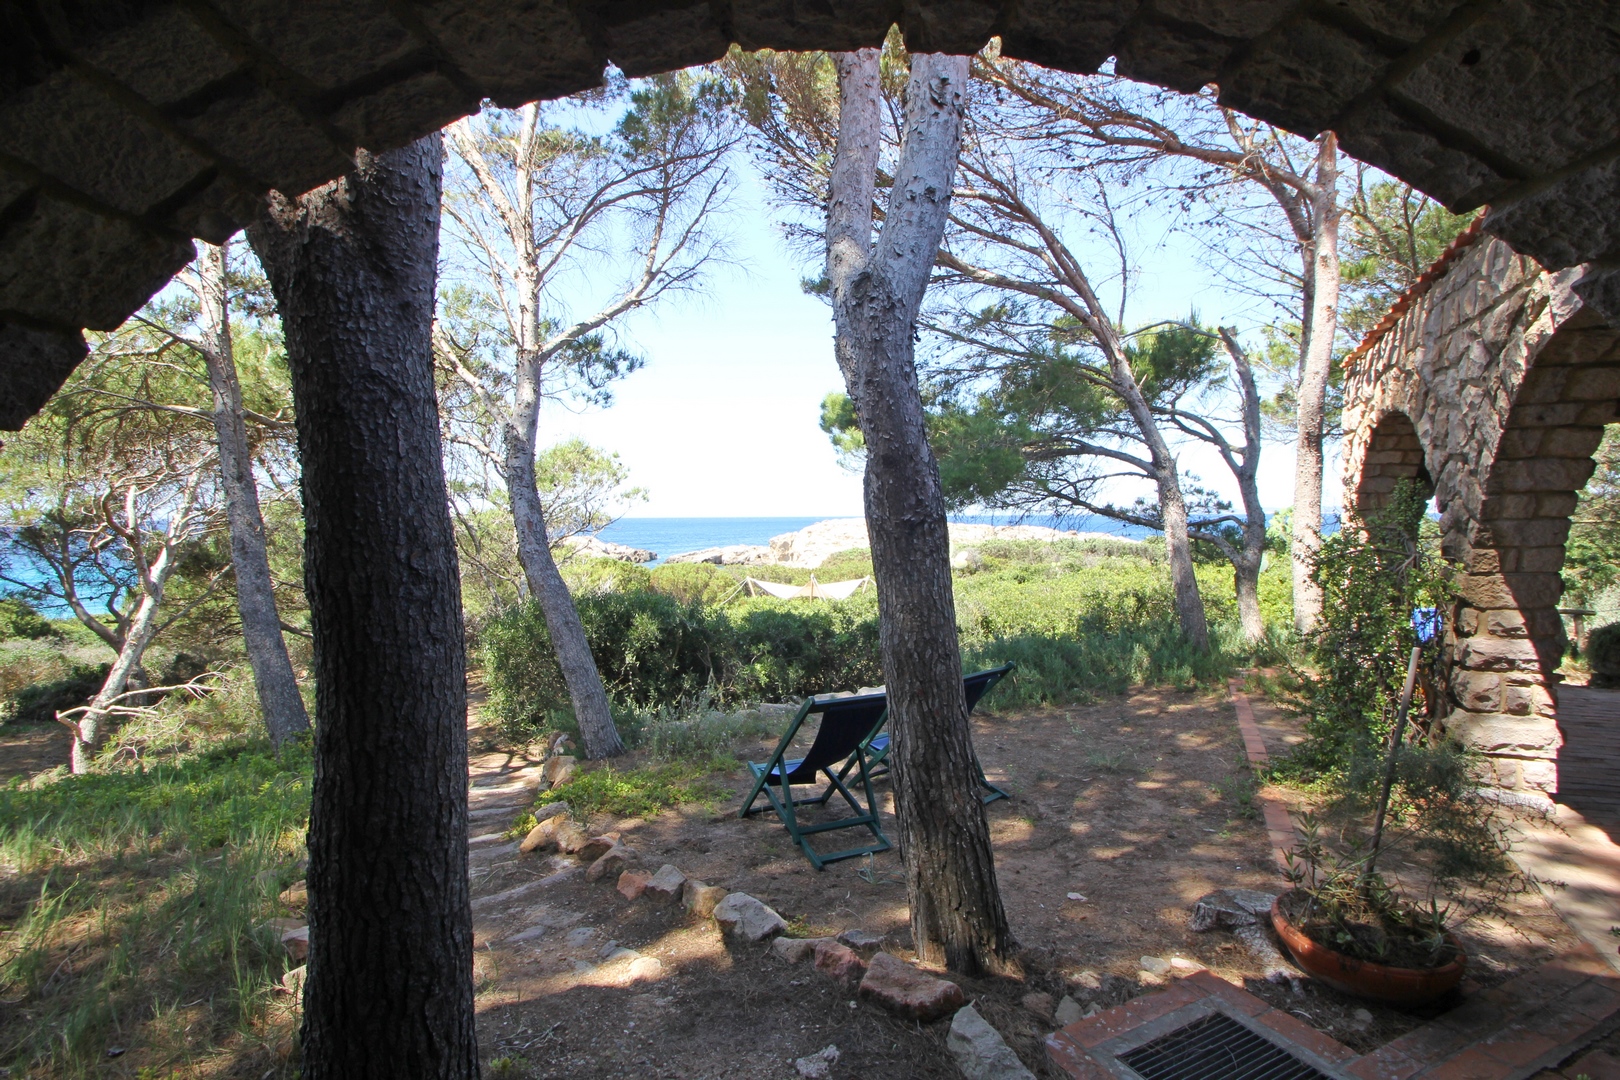 Villa in Sardegna with beach access